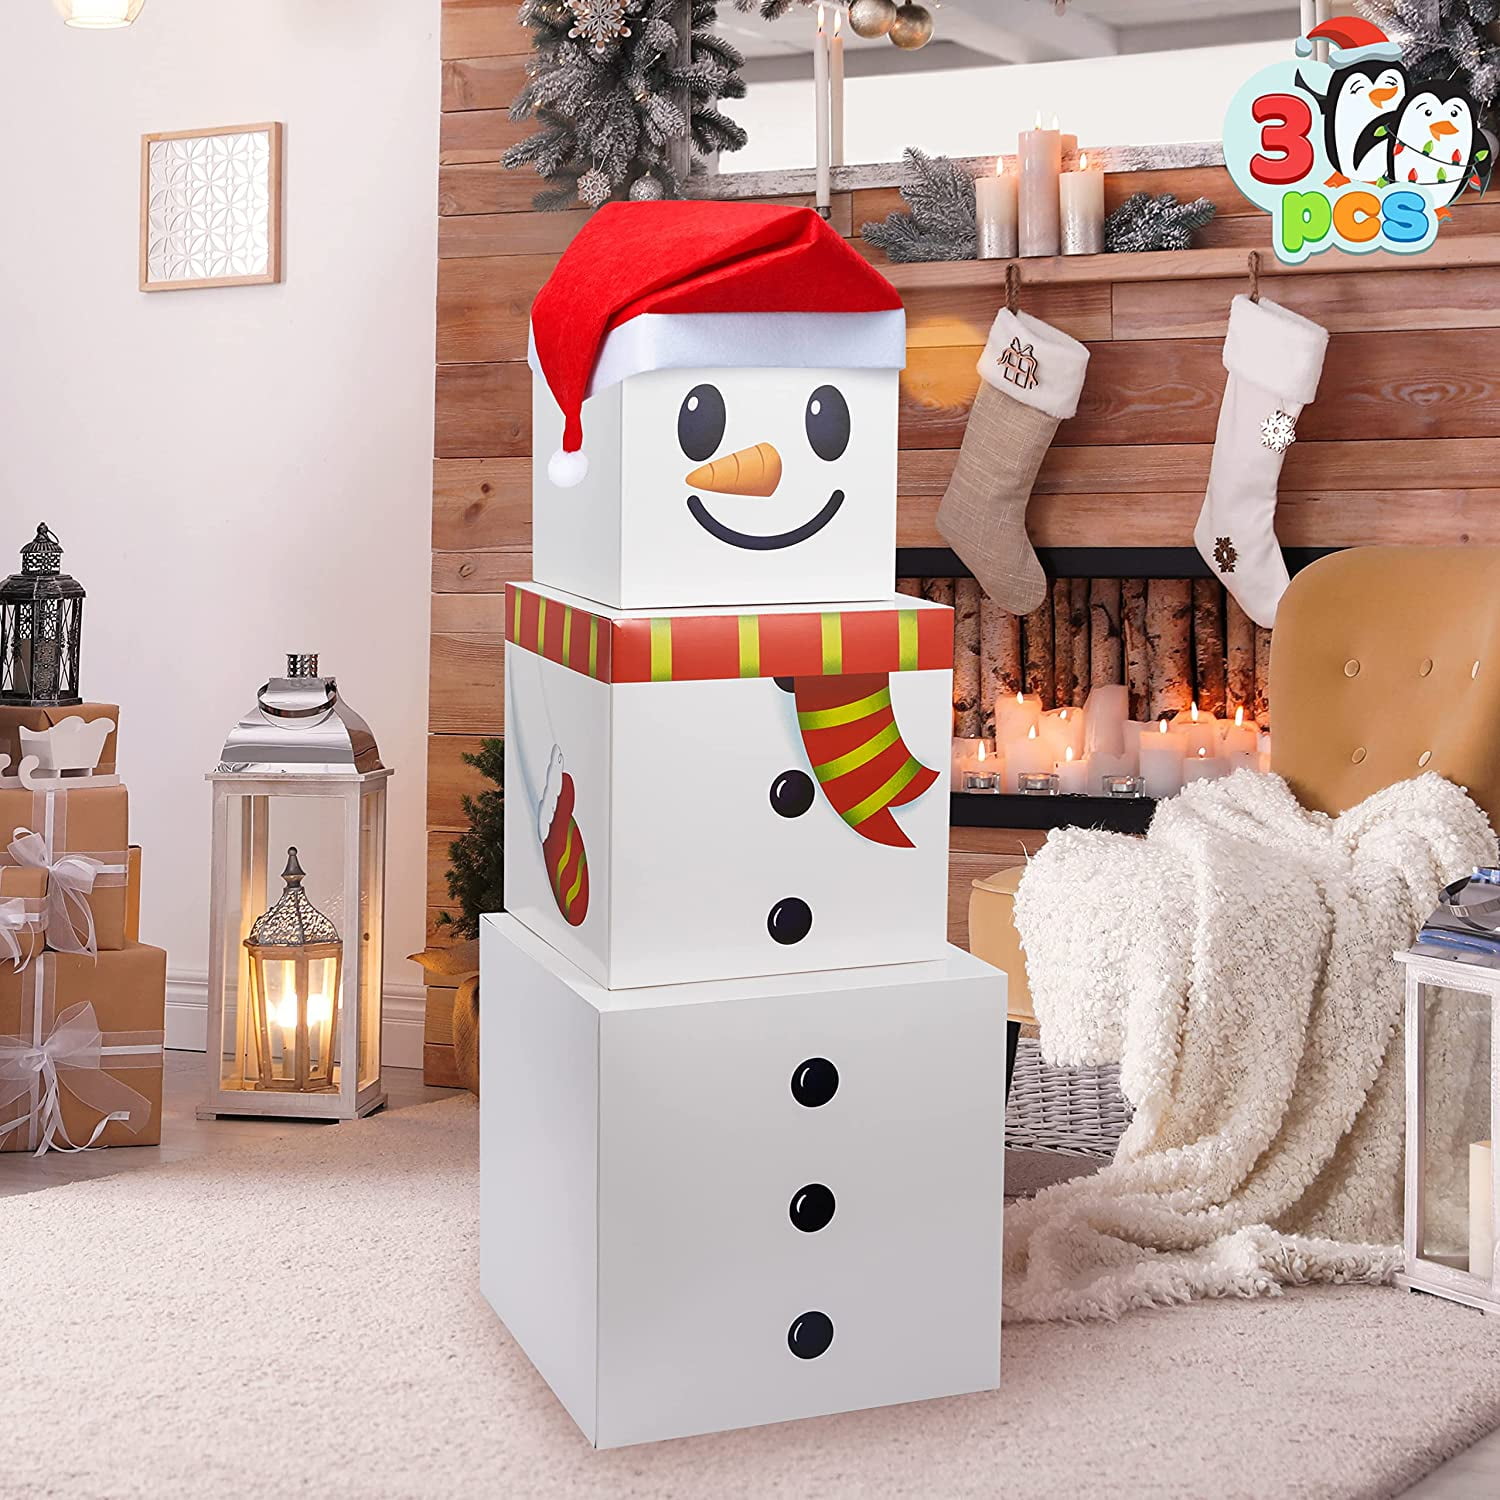 Snowman Soup Christmas Eve Box Xmas Boy Girl Adult Novelty     Buy 3 get 1 FREE 